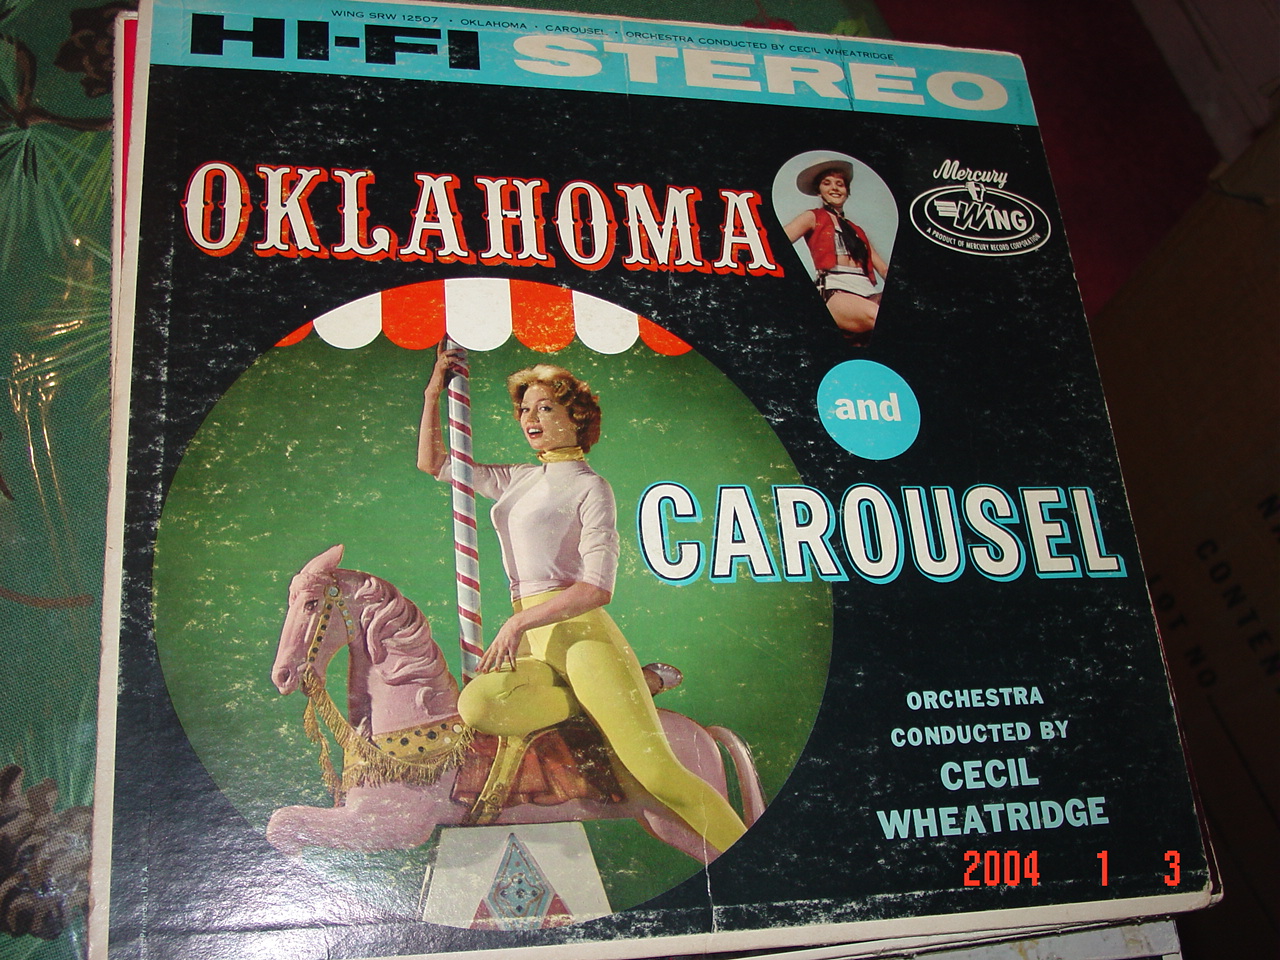 Oklahoma + Carousel LP Cecil Wheatridge Conductor 